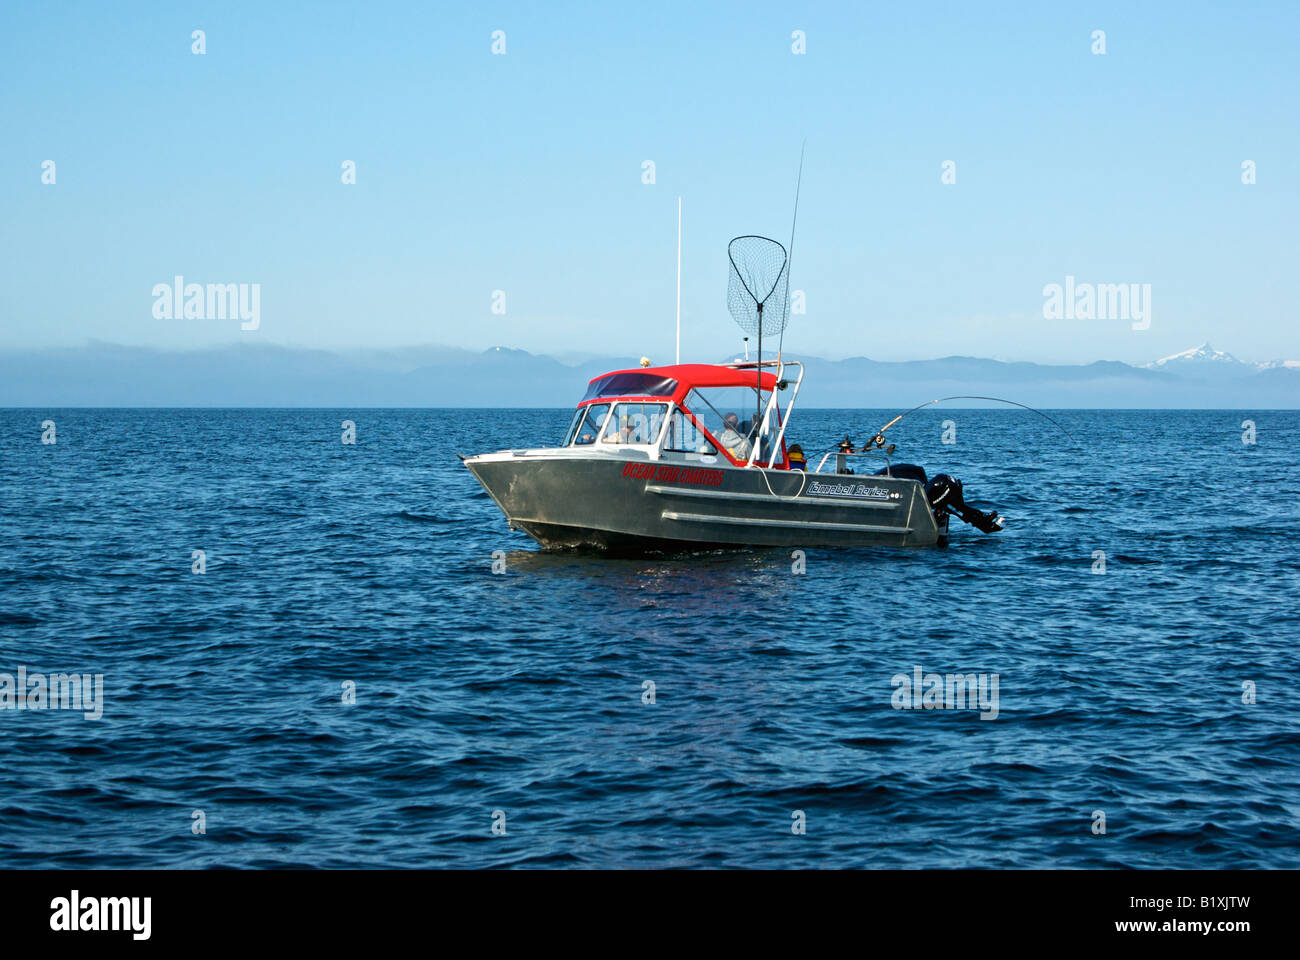 https://c8.alamy.com/comp/B1XJTW/aluminum-sport-fishing-boat-troll-fishing-for-salmon-near-gnarled-B1XJTW.jpg